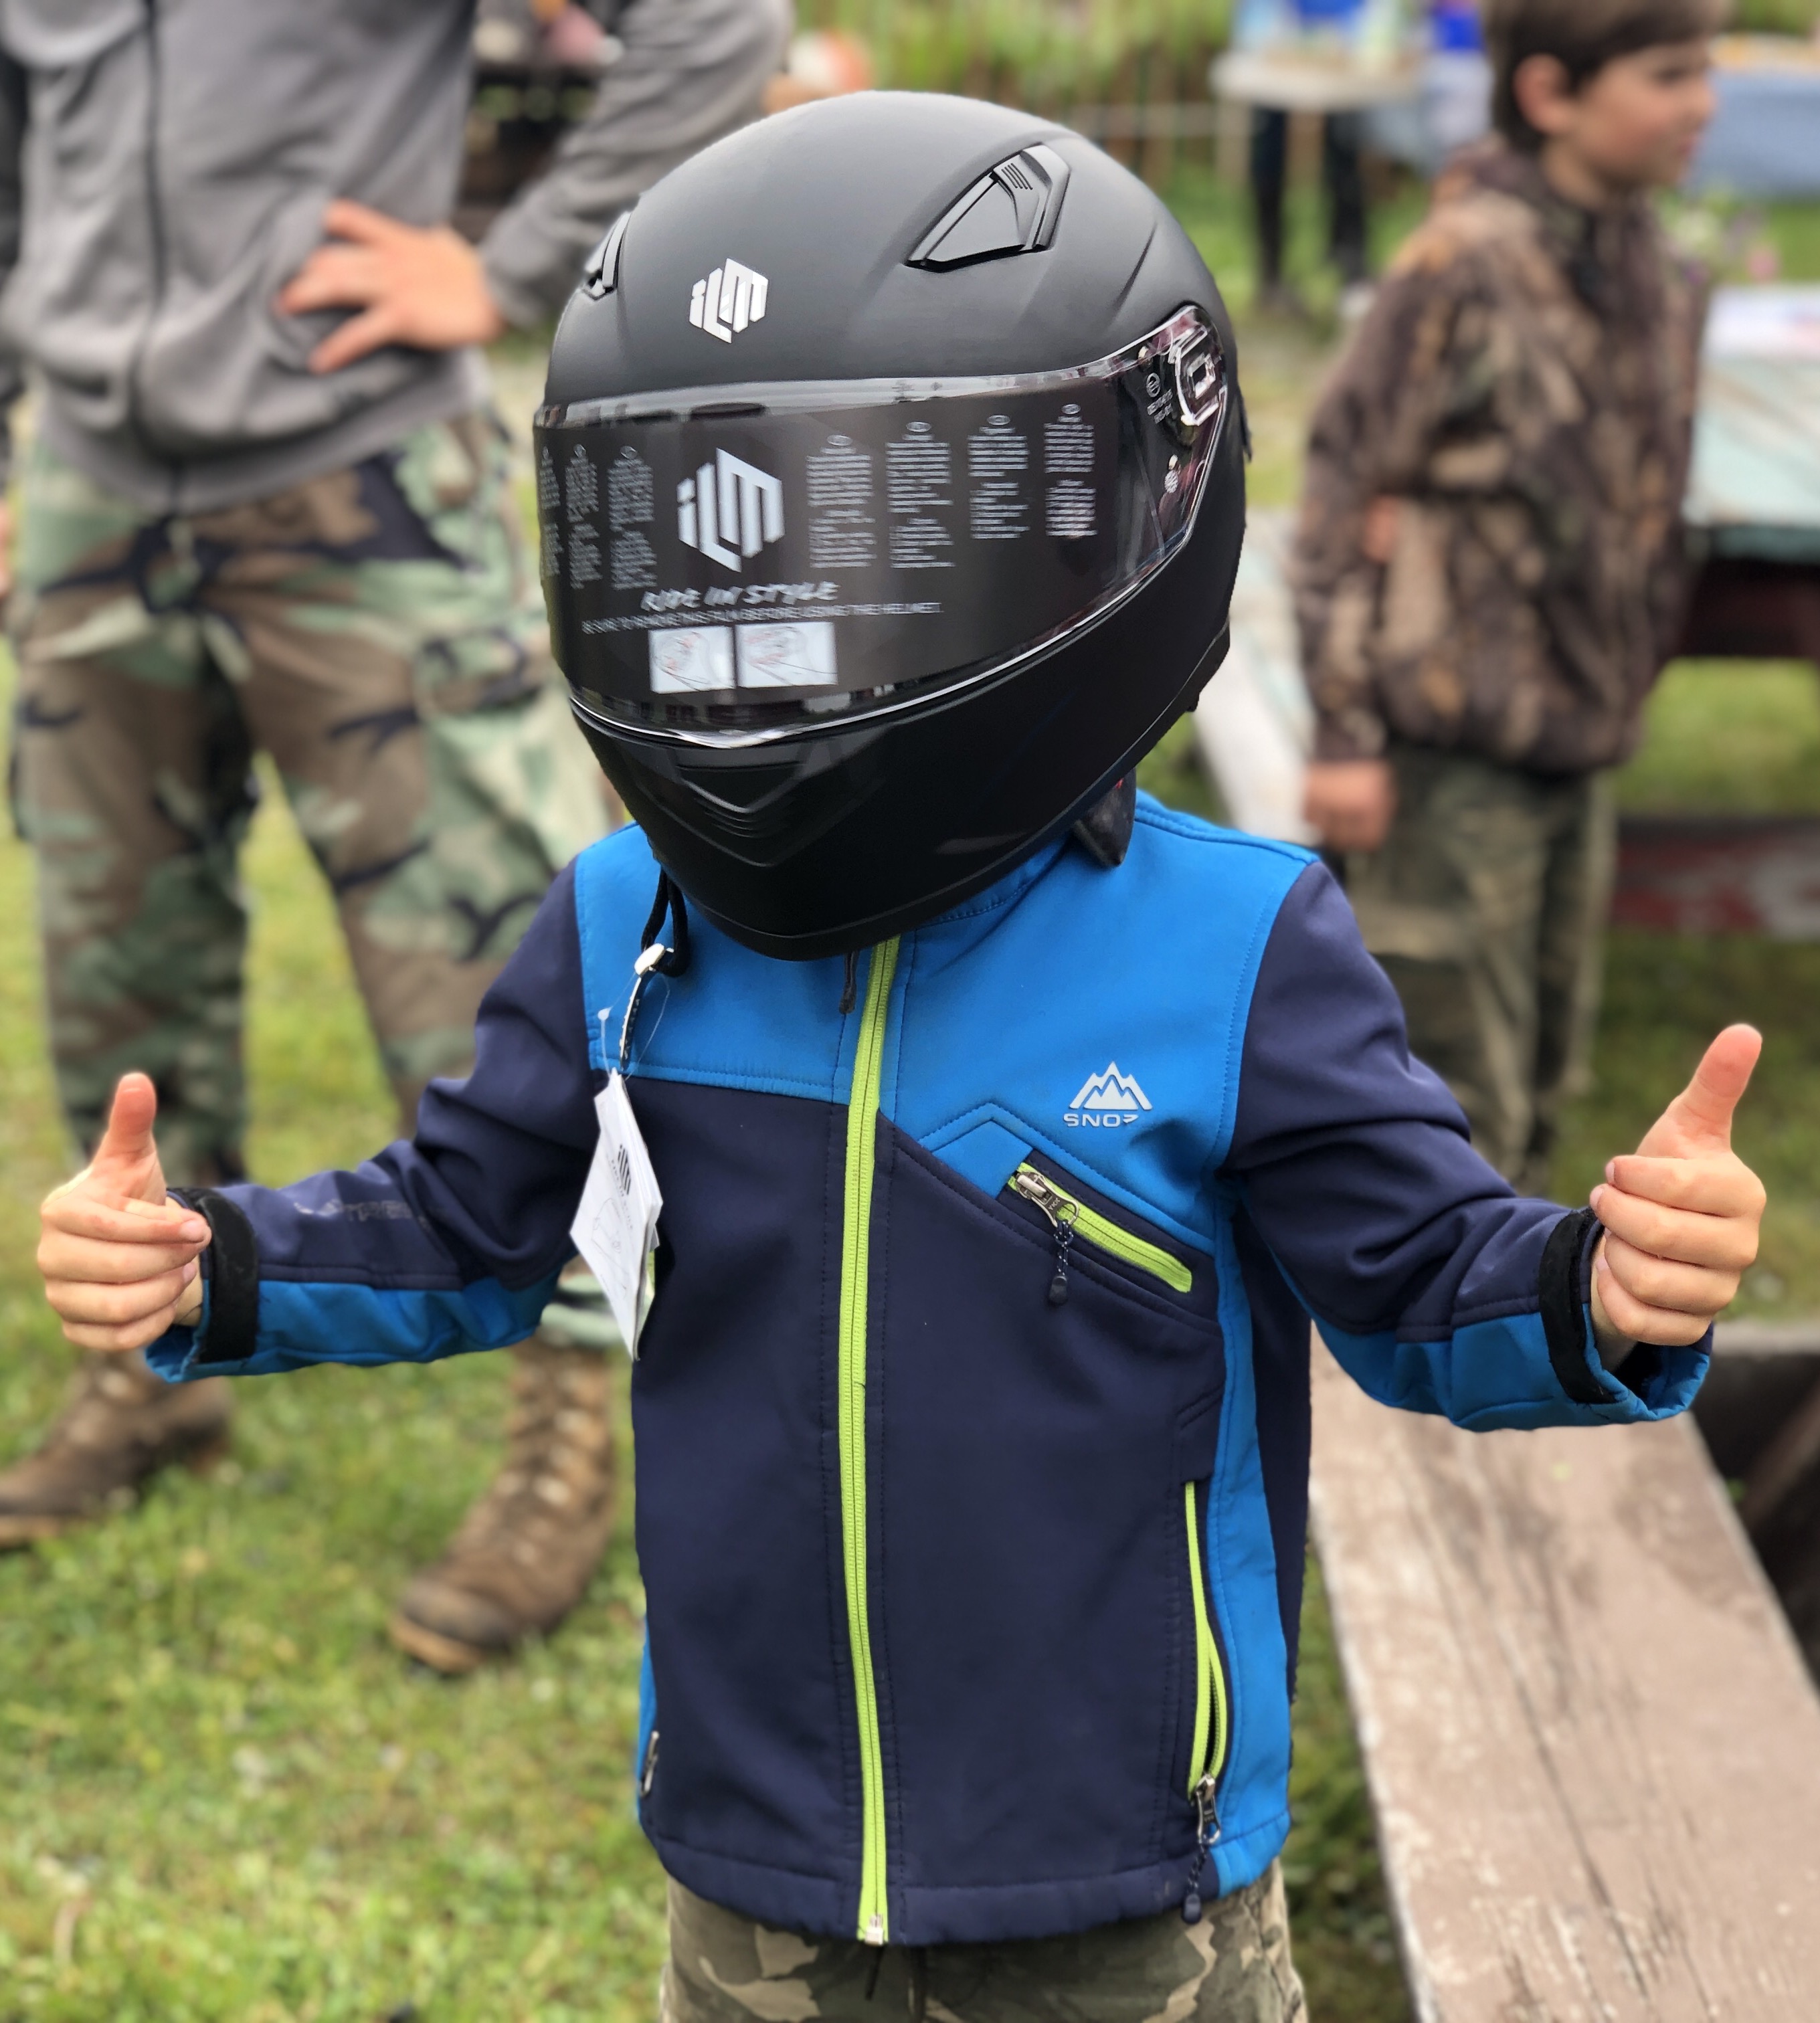 a little boy in a blue jacket wearing an atv helmet giving the thumbs up